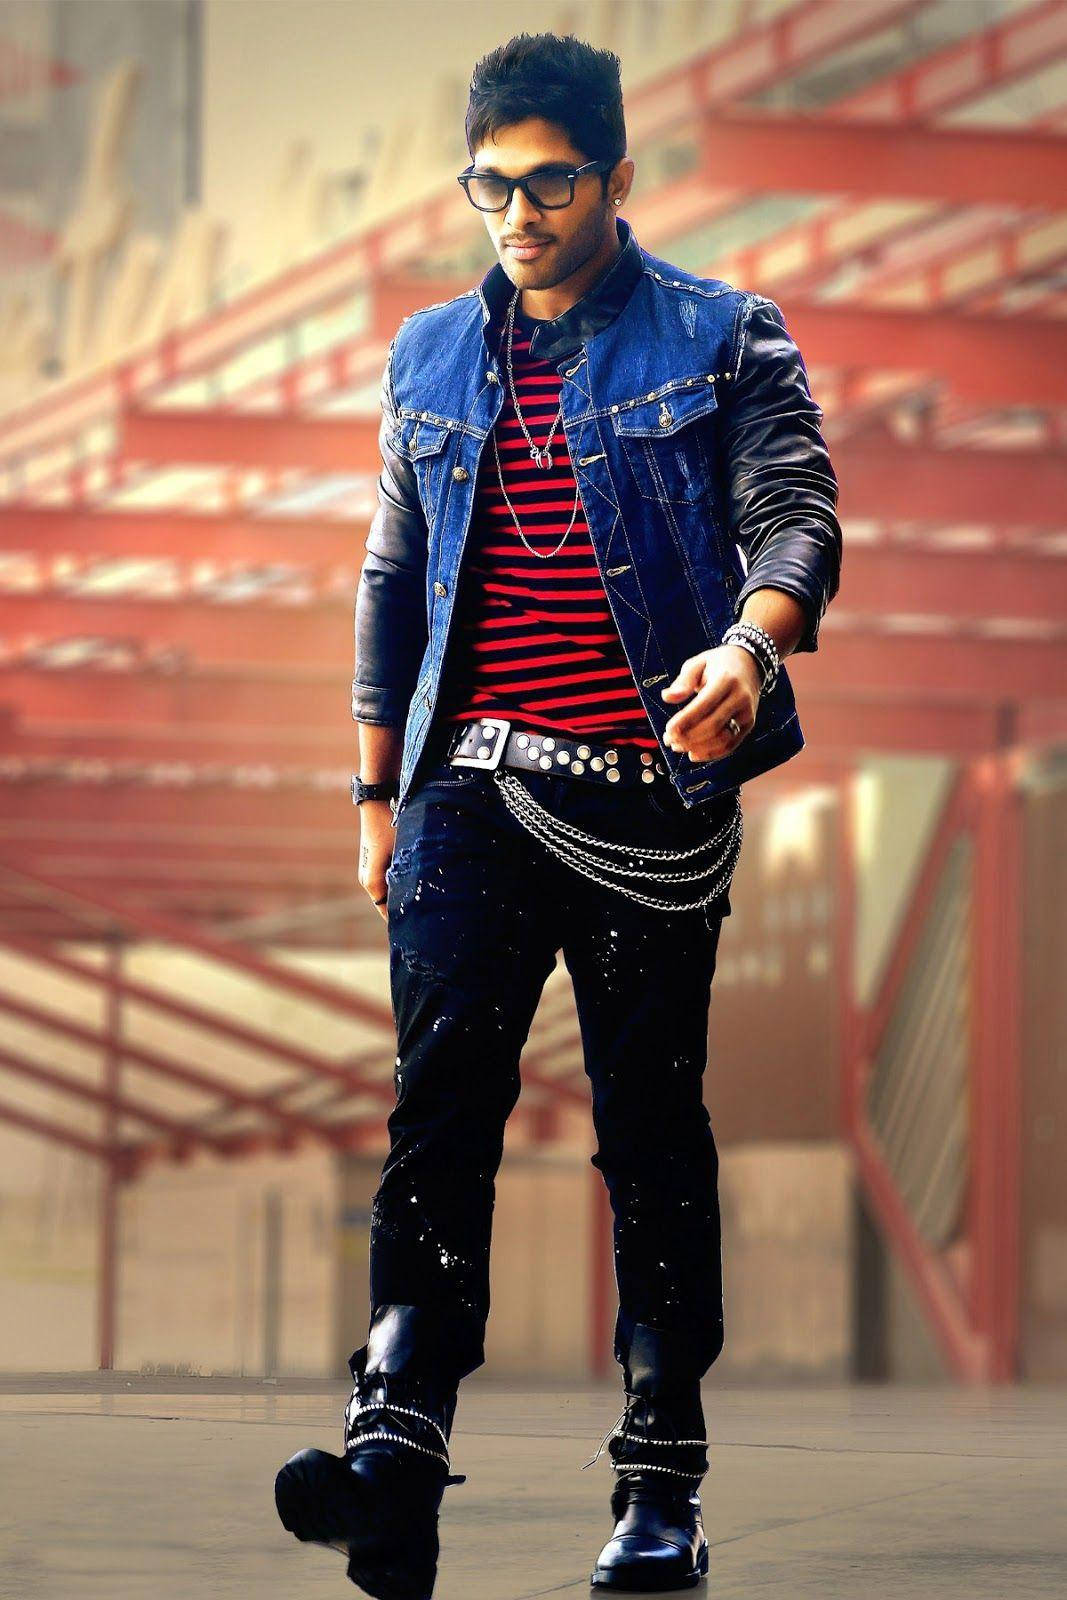 Allu Arjun With Jacket On Striped Shirt Wallpaper